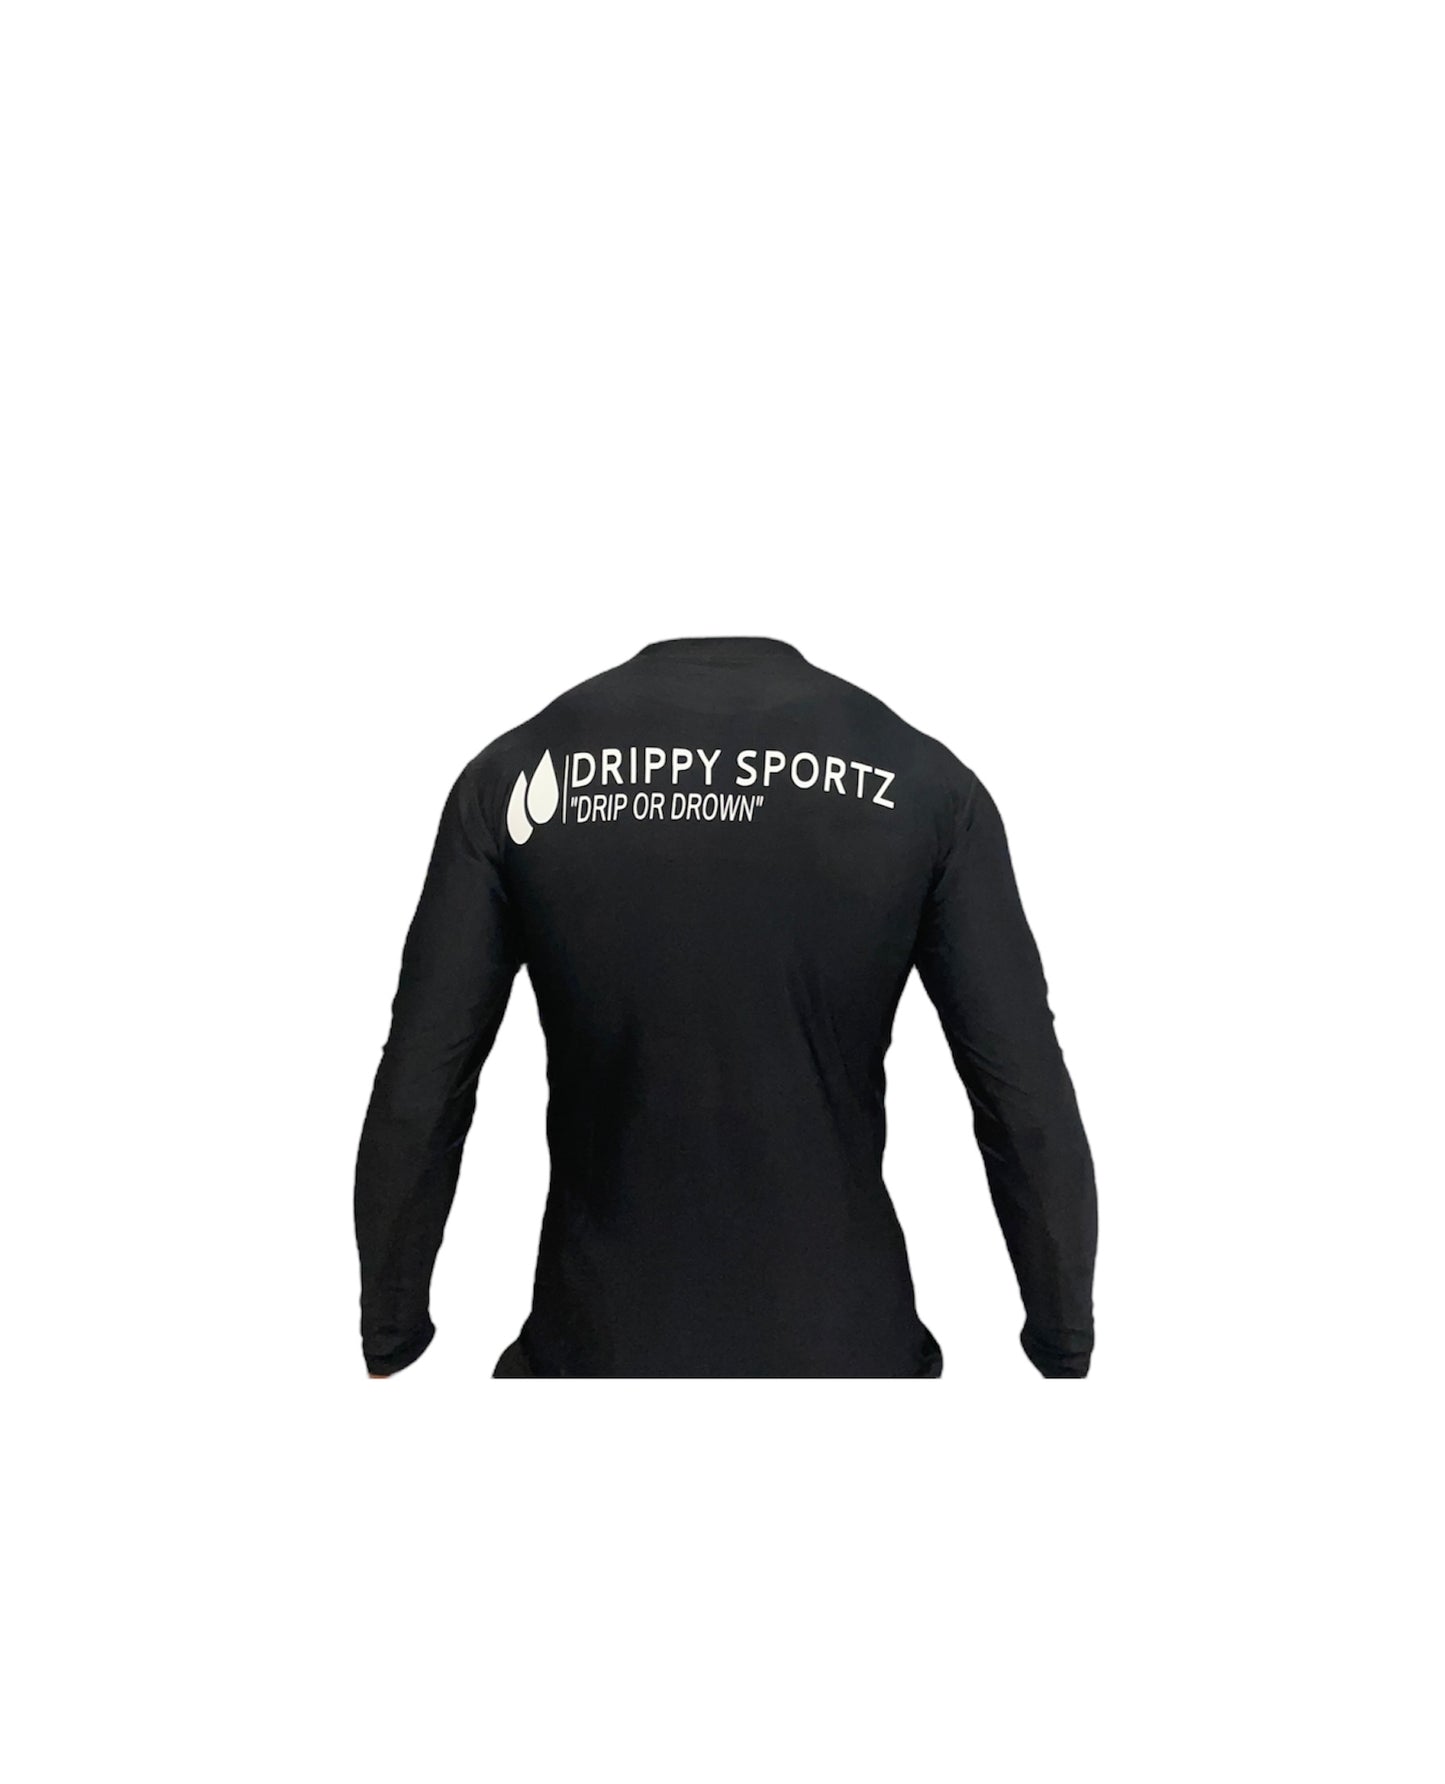 Drippy Sportz Black Long Sleeve Dri-FIT